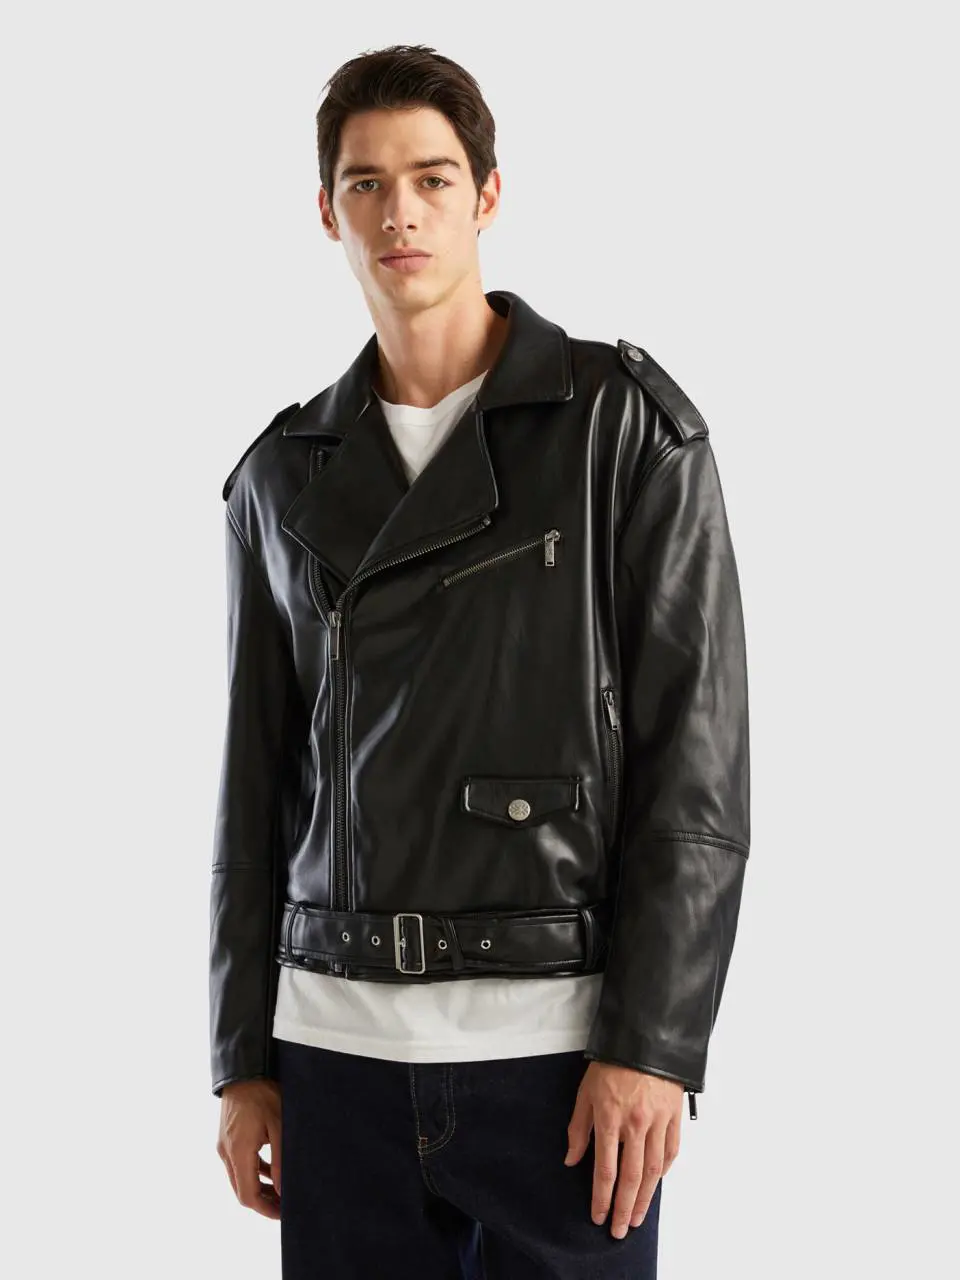 Benetton biker jacket in imitation leather. 1